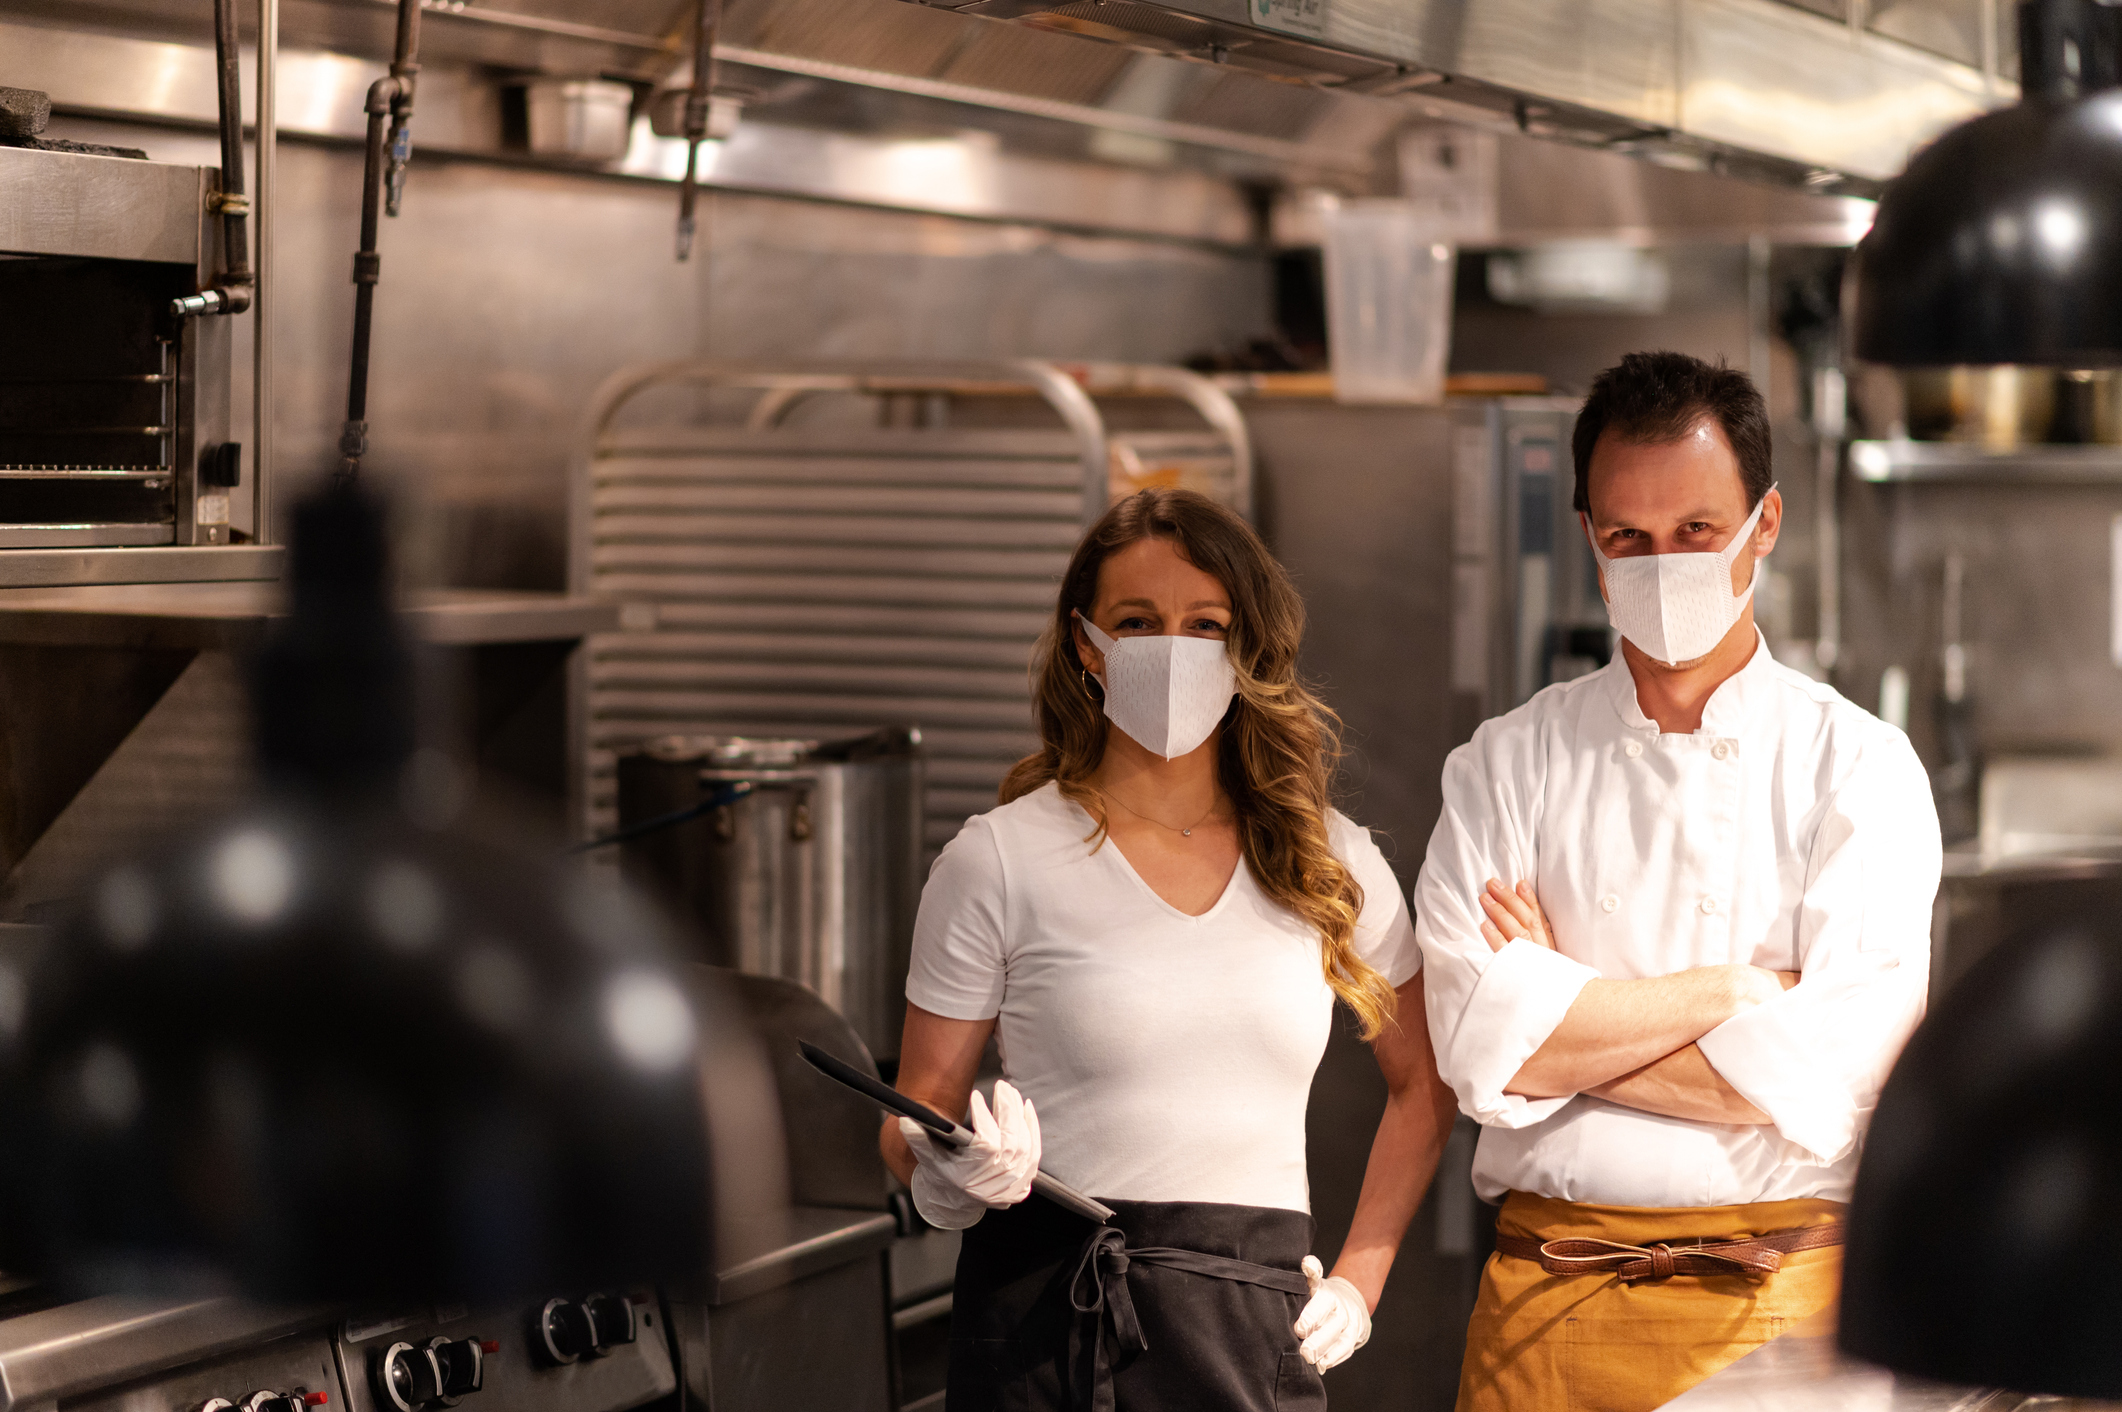 Two service industry workers wear masks inside a restaurant kitchen